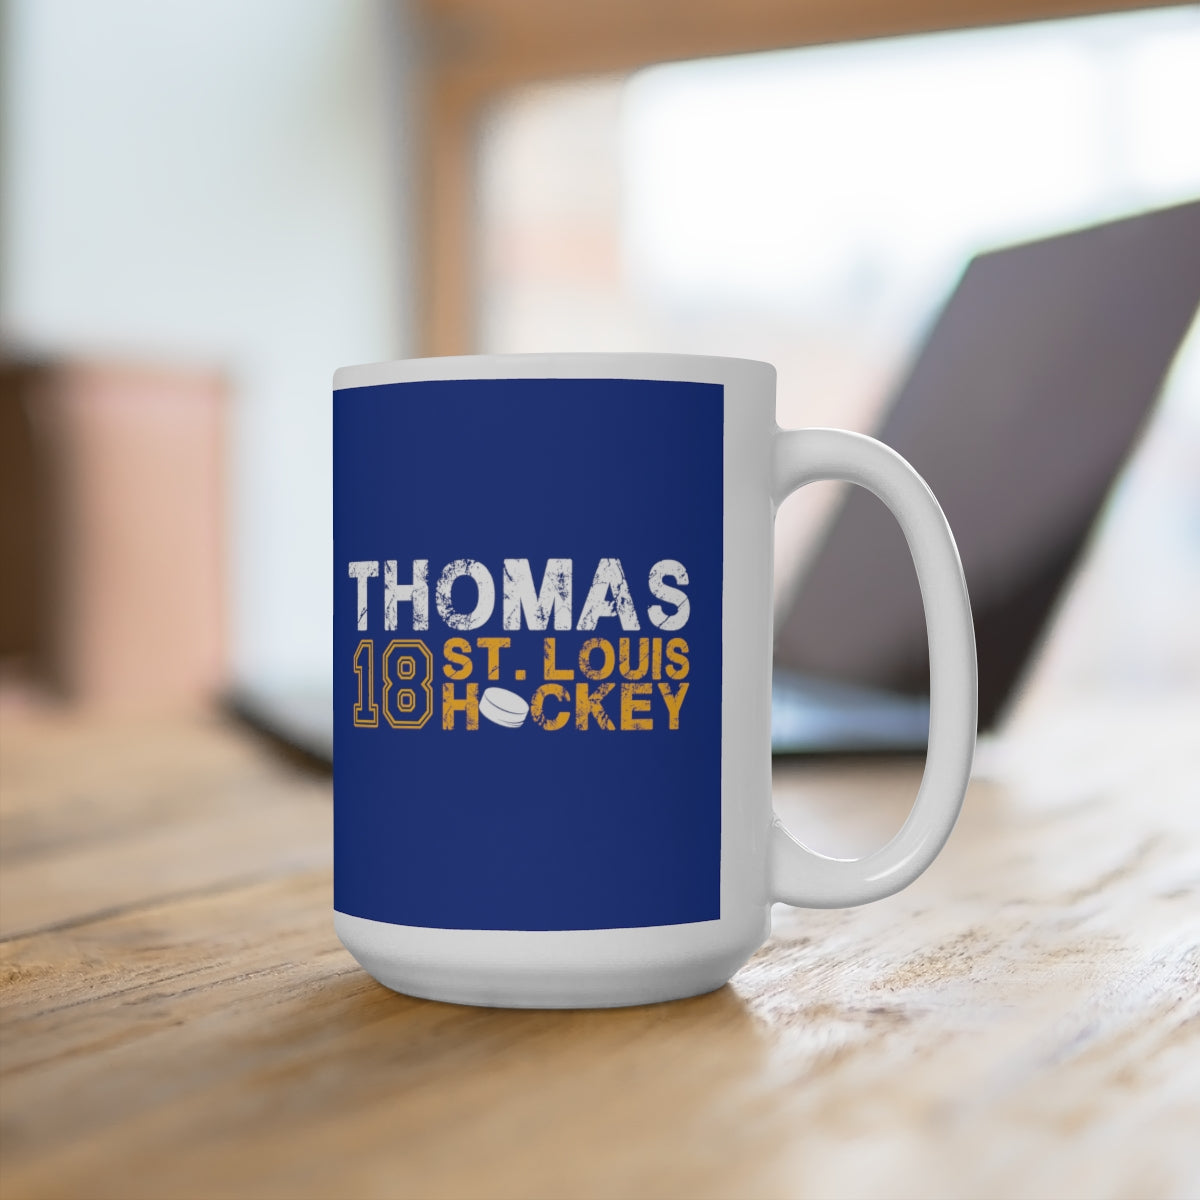 Thomas 18 St. Louis Hockey Ceramic Coffee Mug In Blue, 15oz